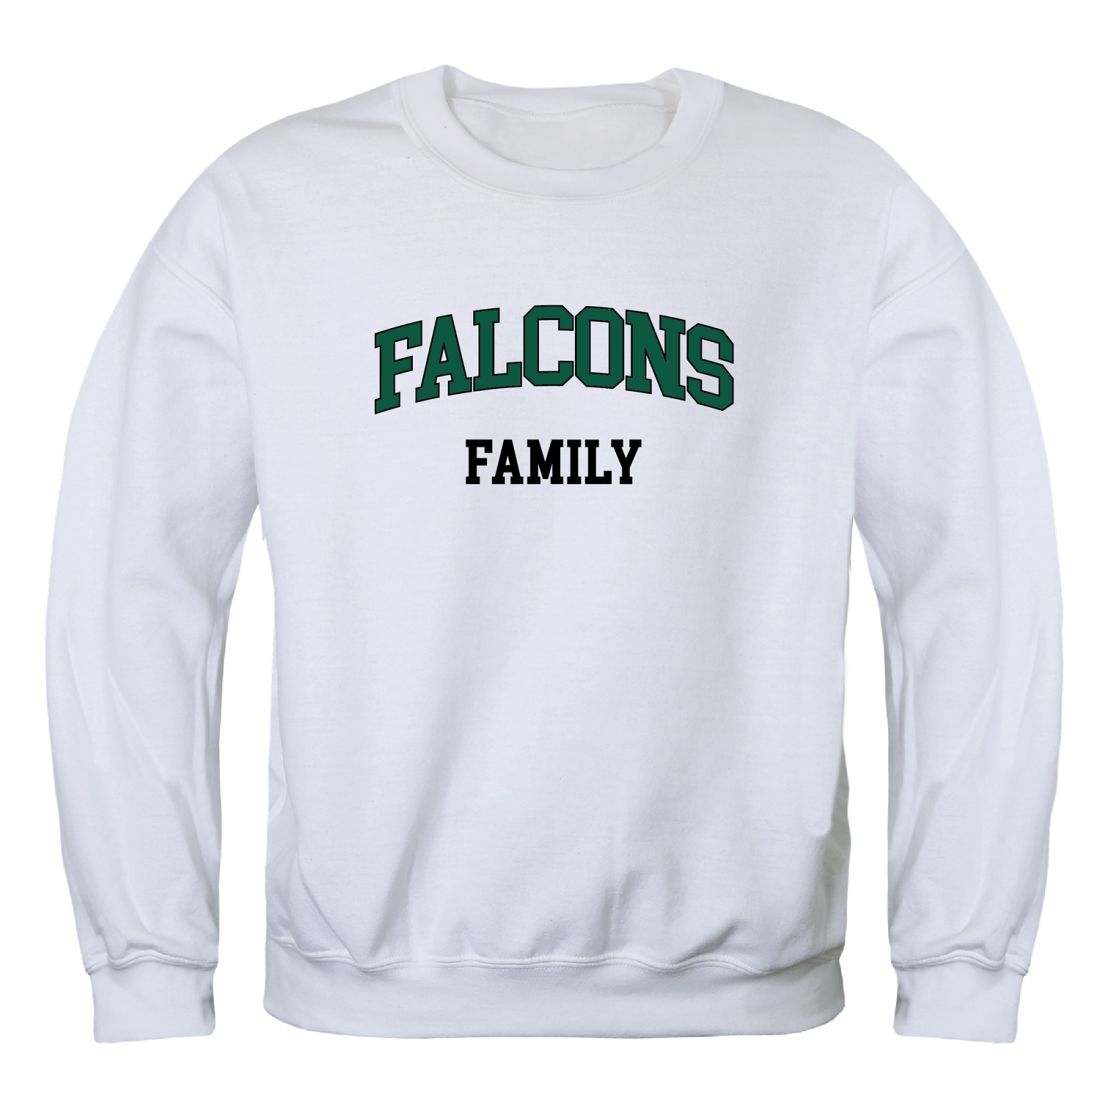 Fitchburg-State-University-Falcons-Family-Fleece-Crewneck-Pullover-Sweatshirt